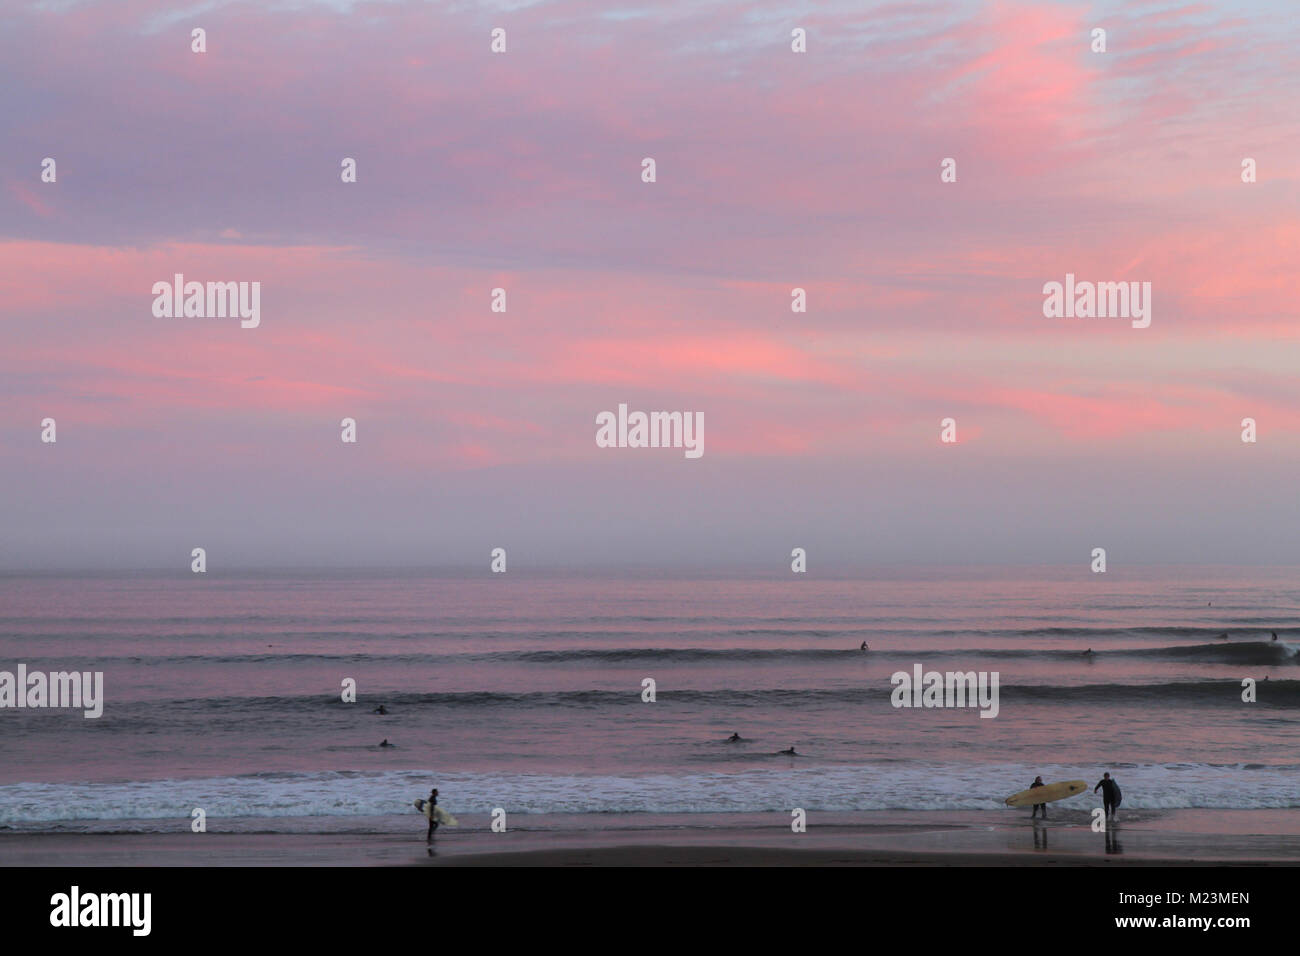 Surfers at sunset on Cowell's Beach, Santa Cruz, California, United States Stock Photo